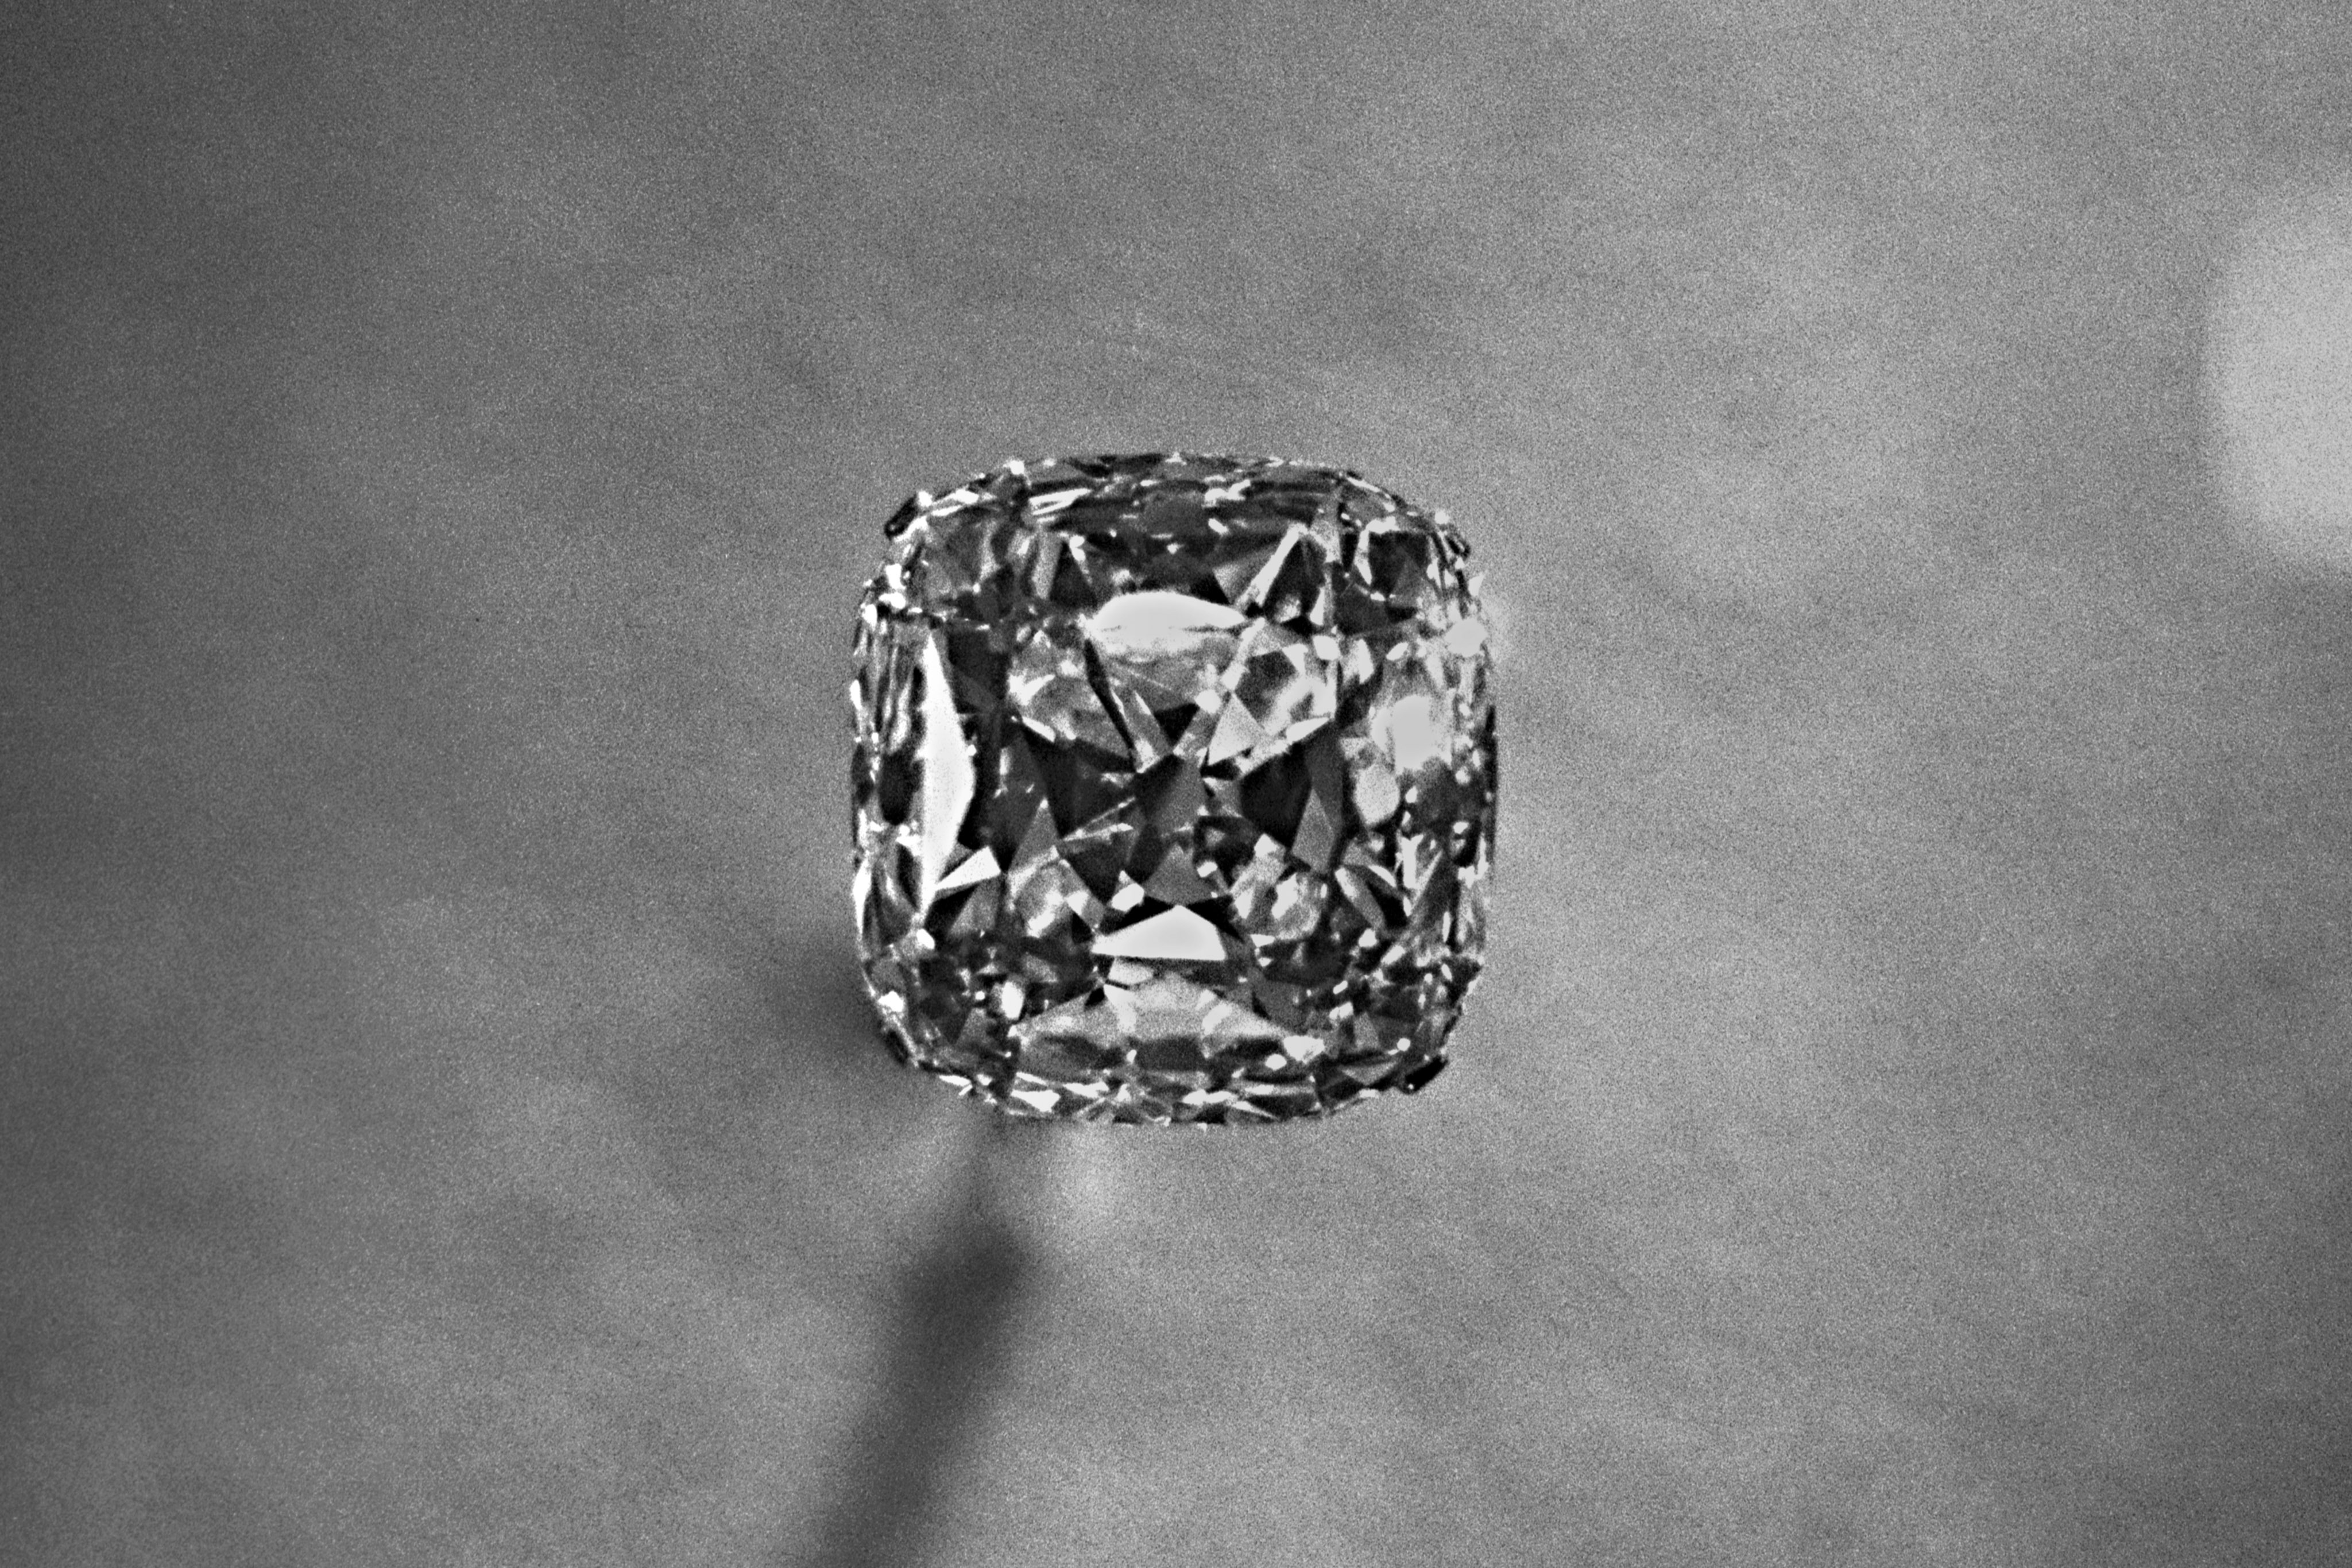 The Tiffany Diamond on display in London in 1986 